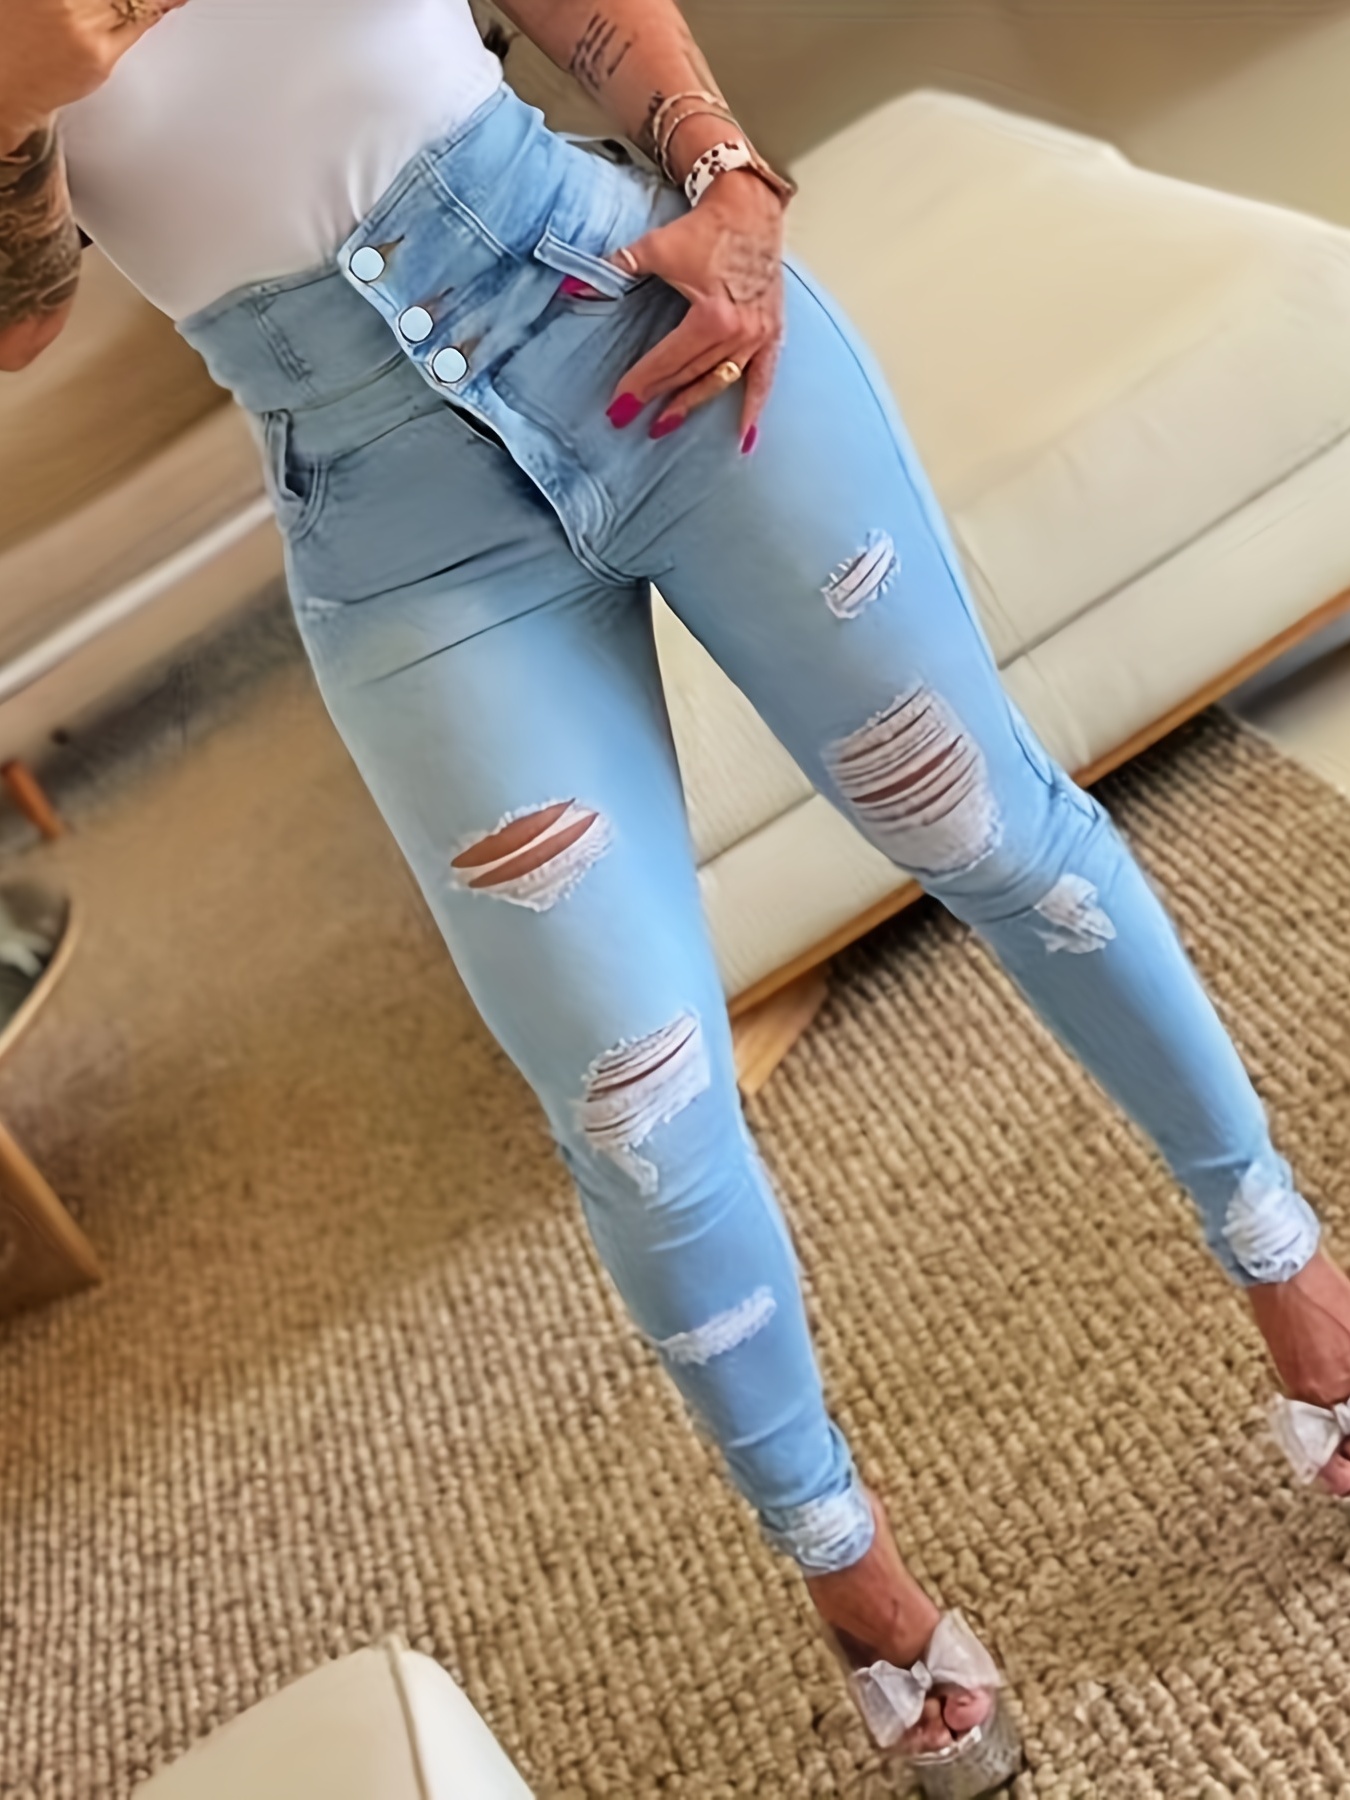 Dark Blue Versatile Skinny Jeans, Slim Fit High-Stretch Slant Pockets Tight  Jeans, Women's Denim Jeans & Clothing